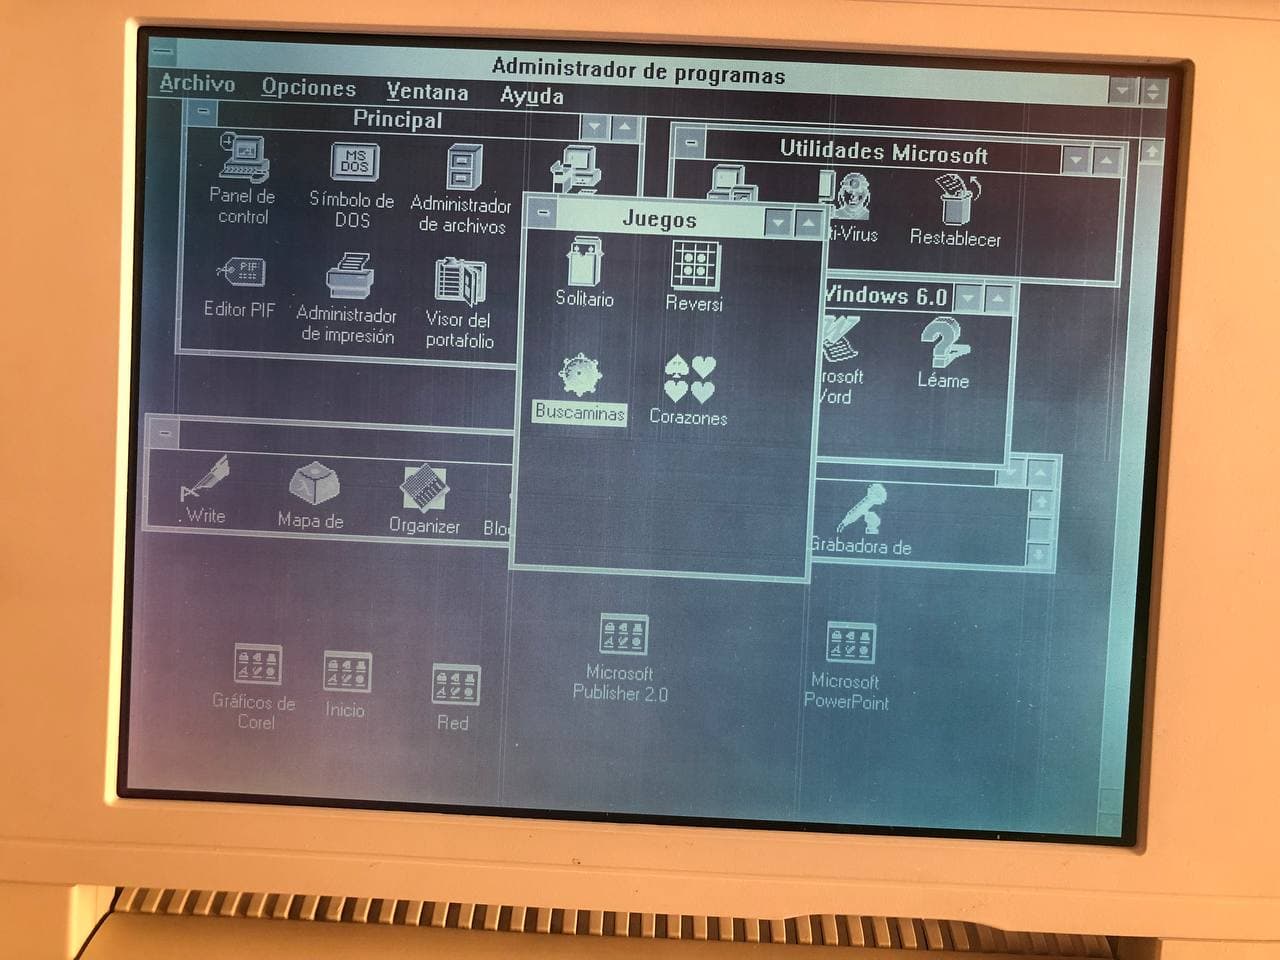 Обзор ноутбука 1990 года — Zenith MasterSport 386sx - 16